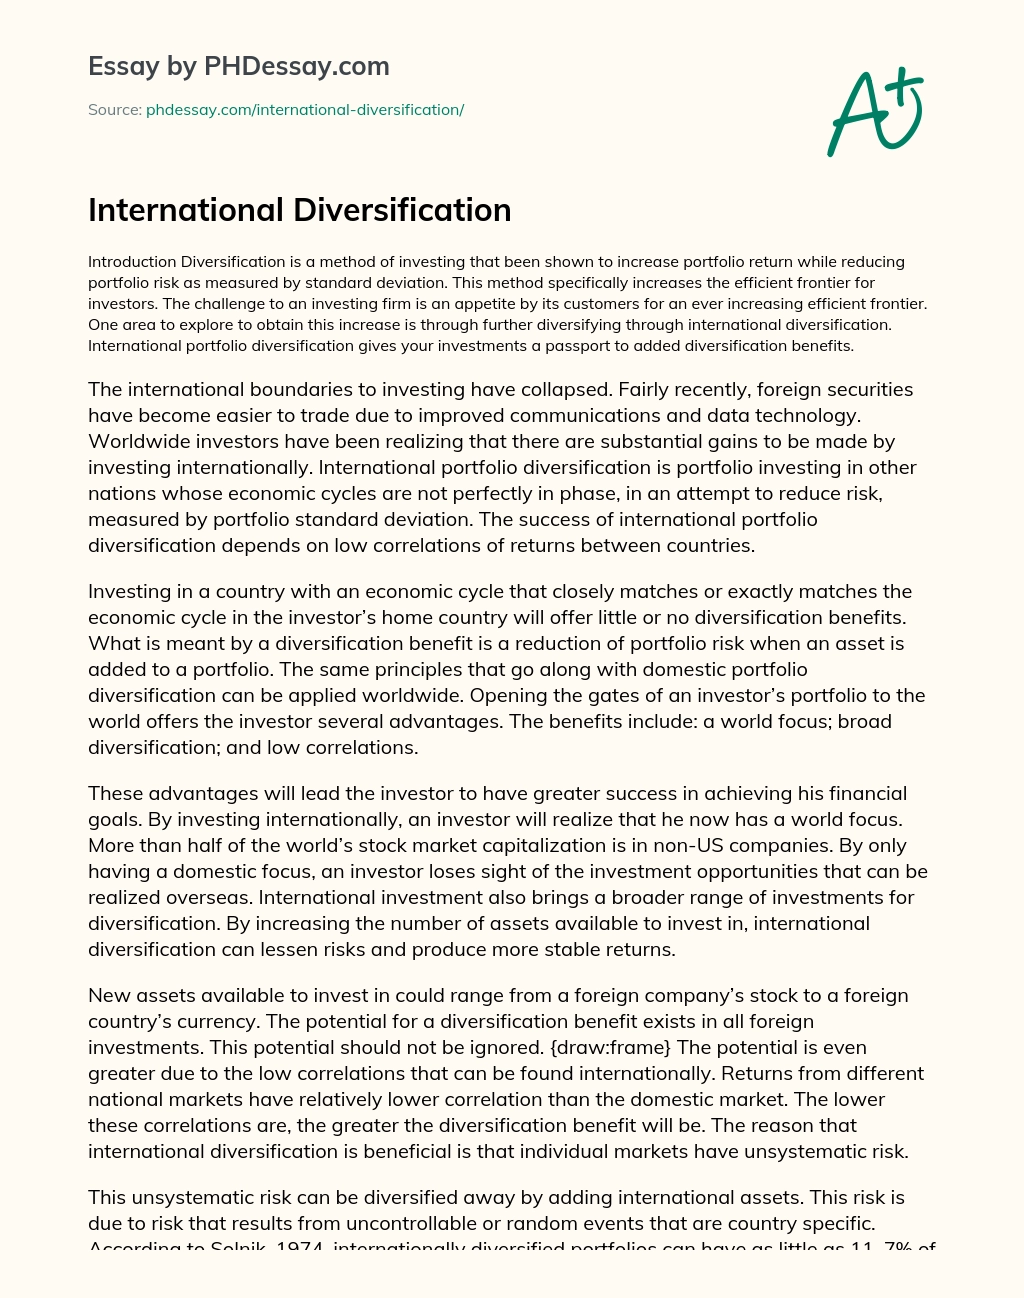 International Diversification essay